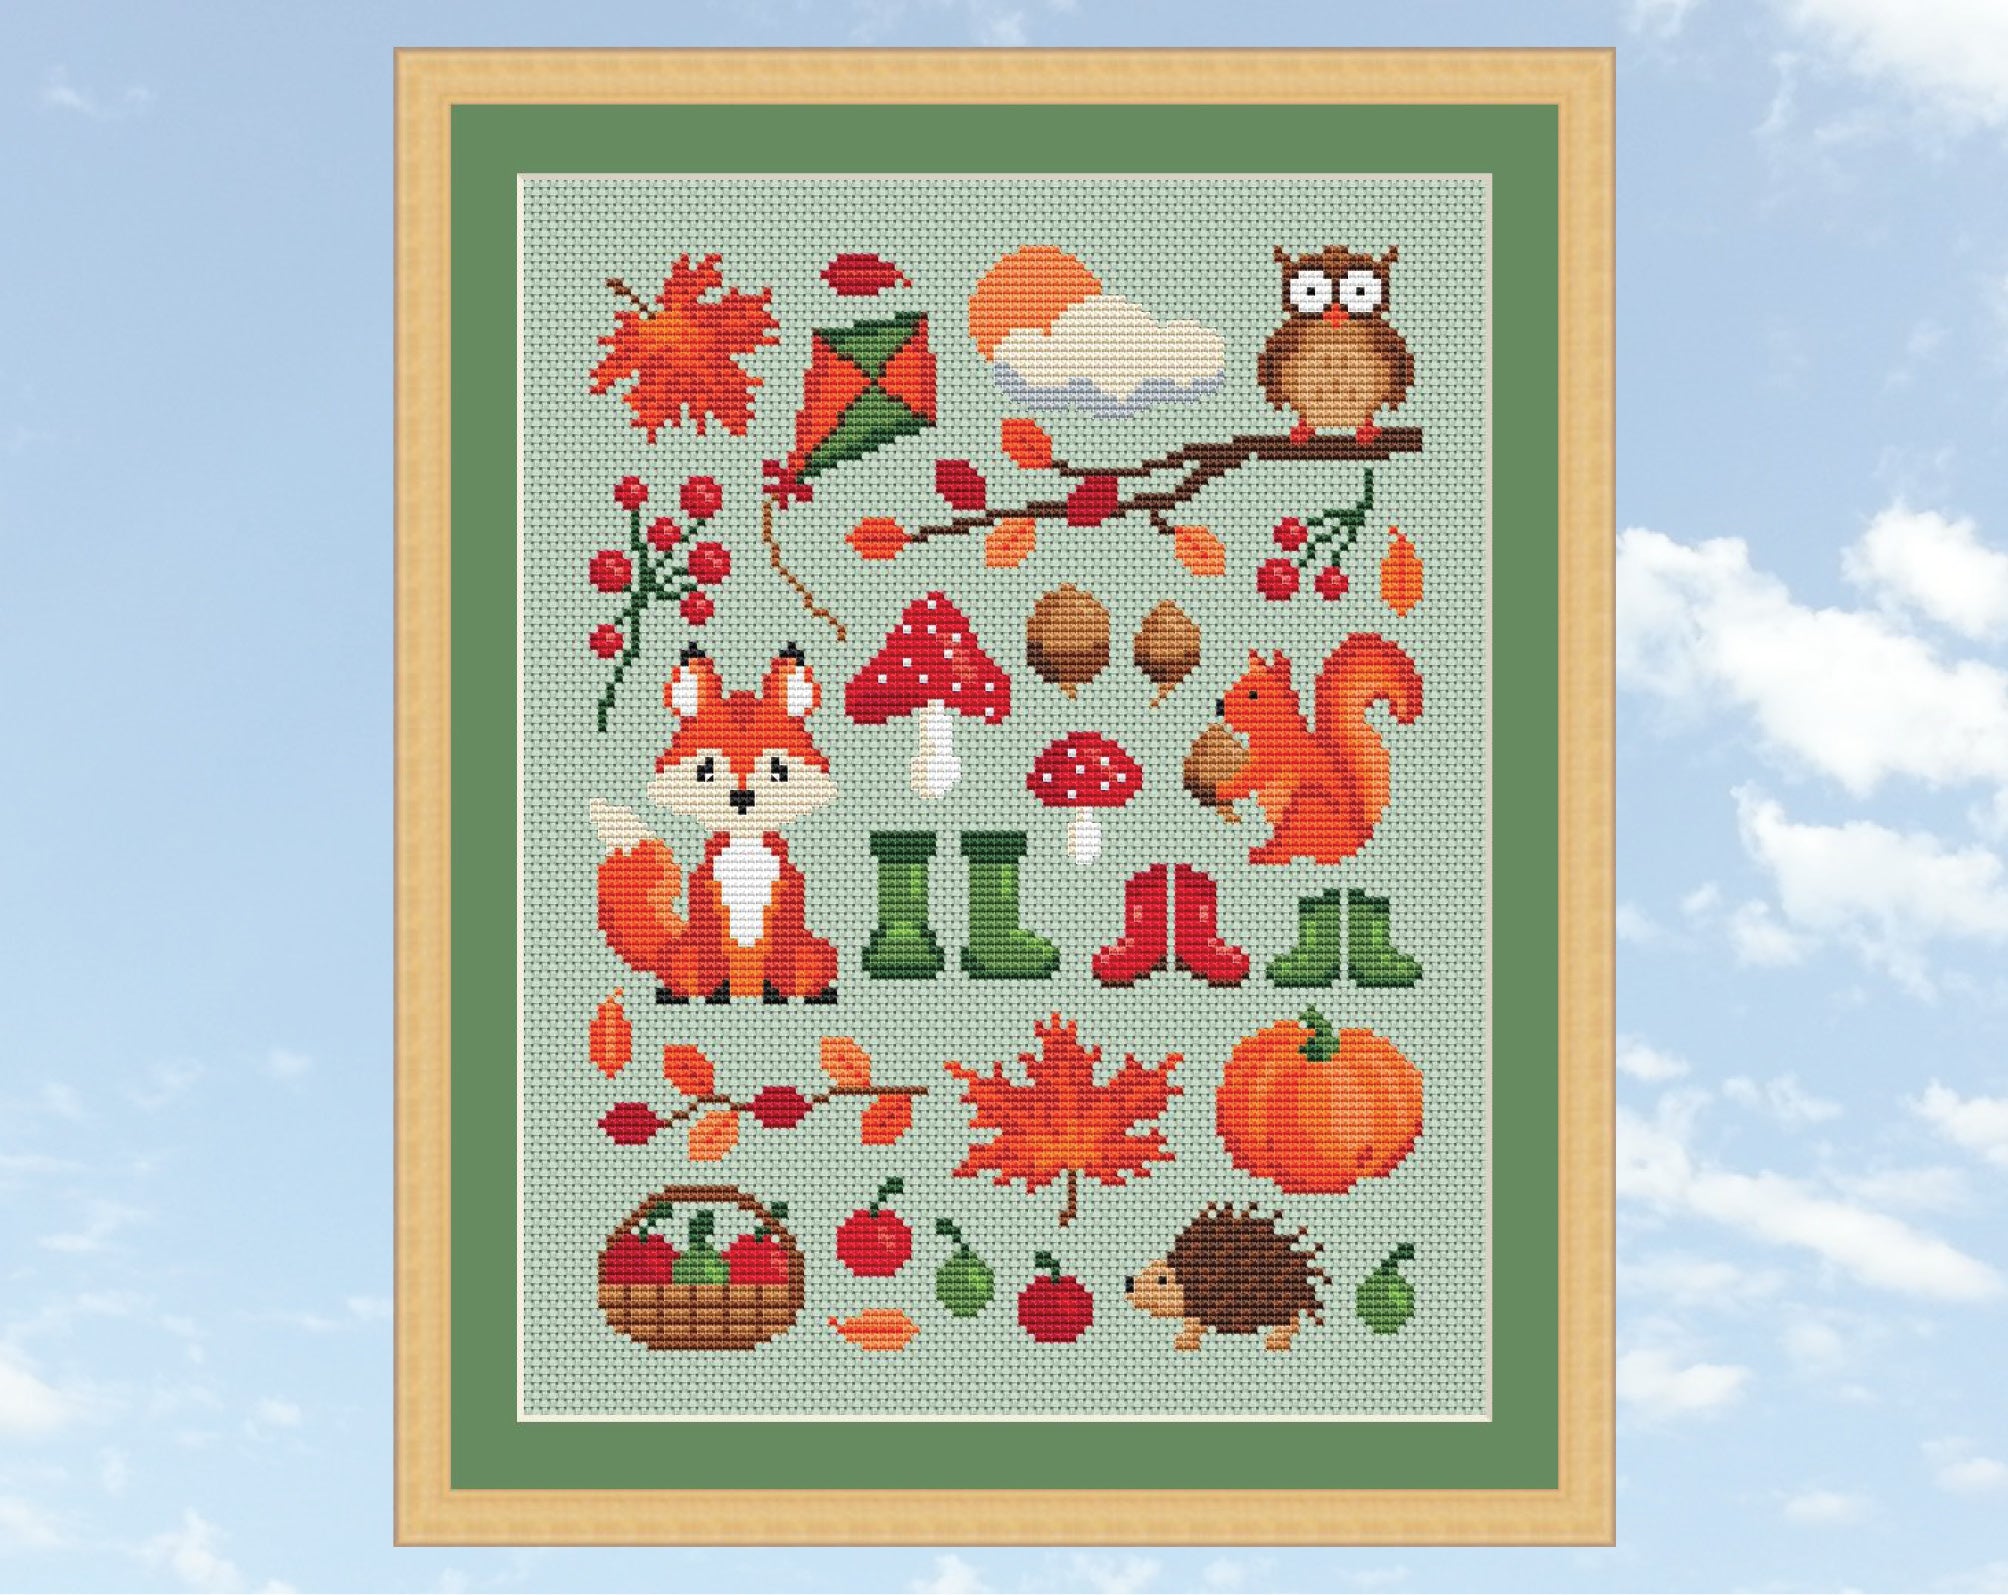 Autumn Bounty cross stitch pattern - shown with frame